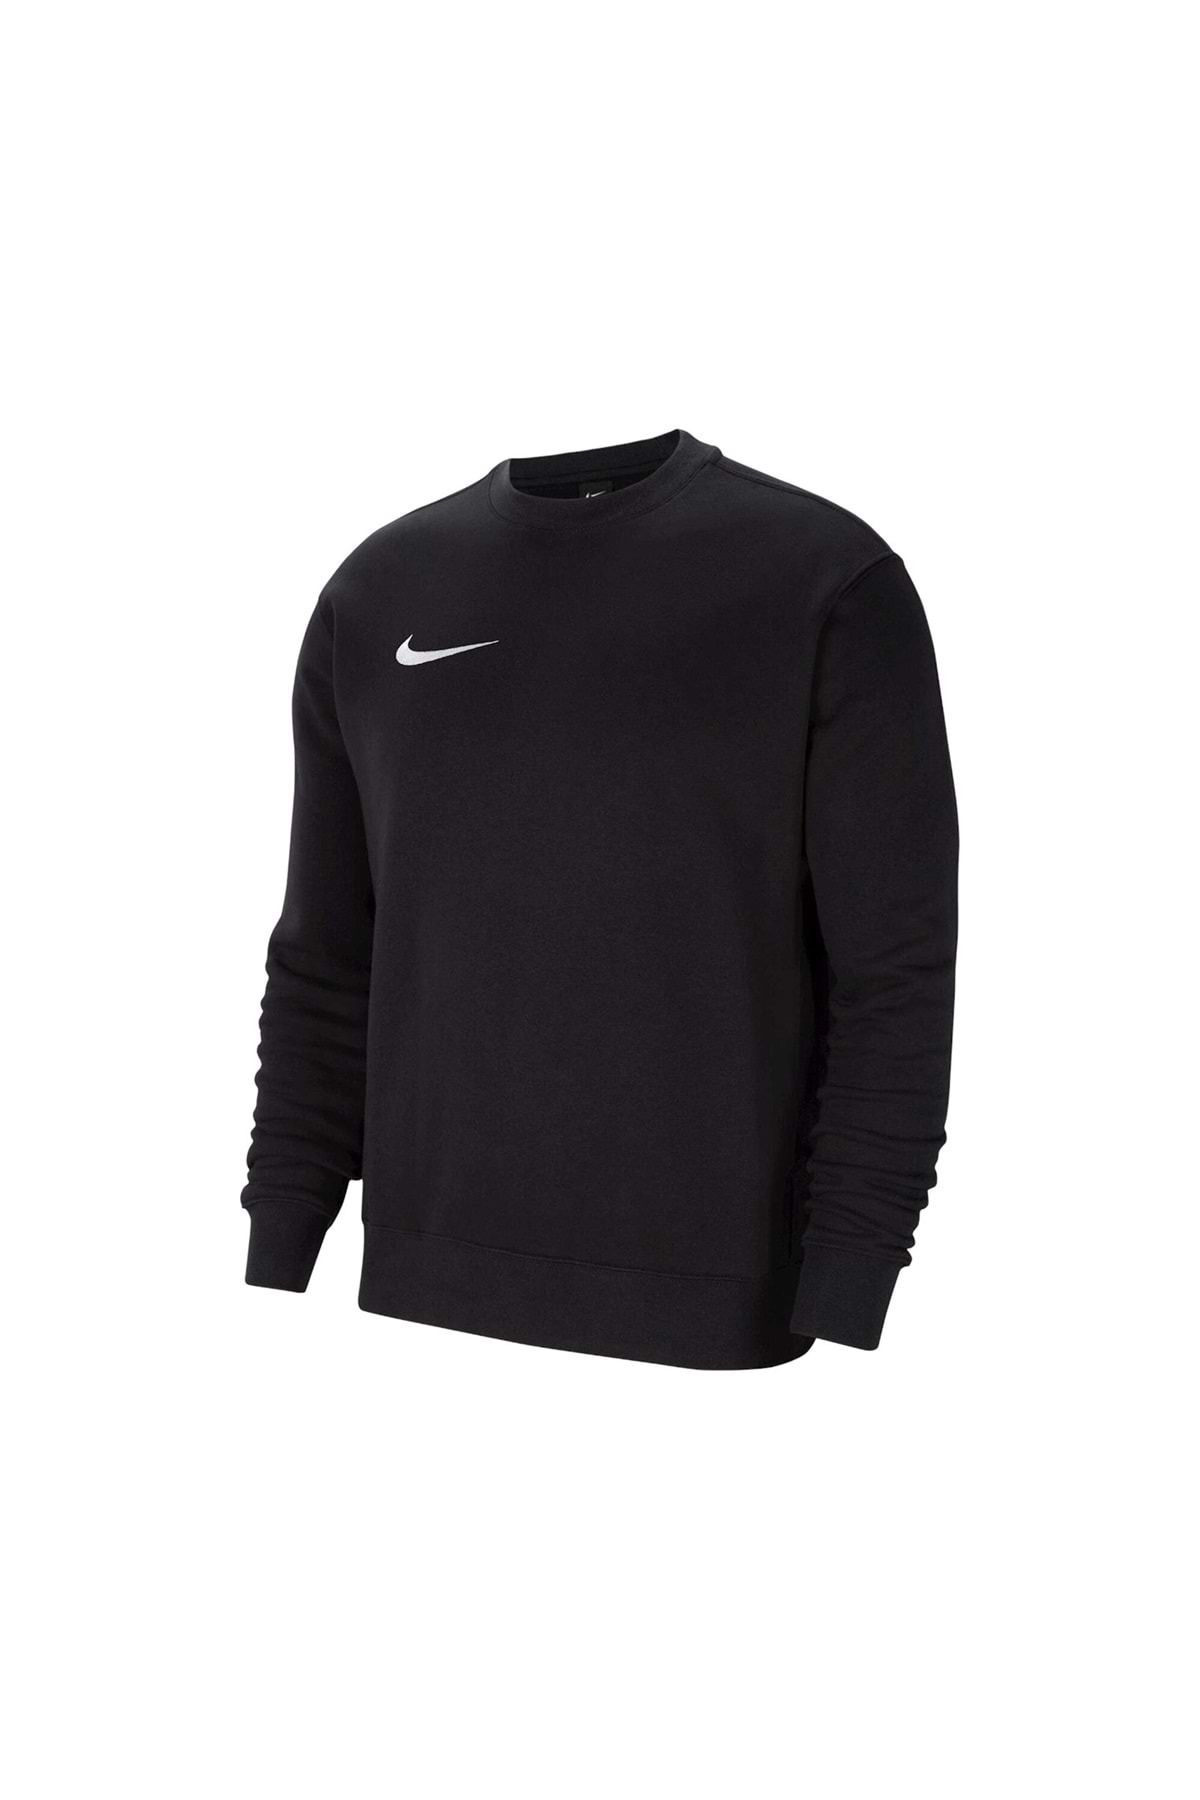 Nike Cw6902-010 Flc Park20 Crew Erkek Uzun Kollu Sweatshirt Siyah